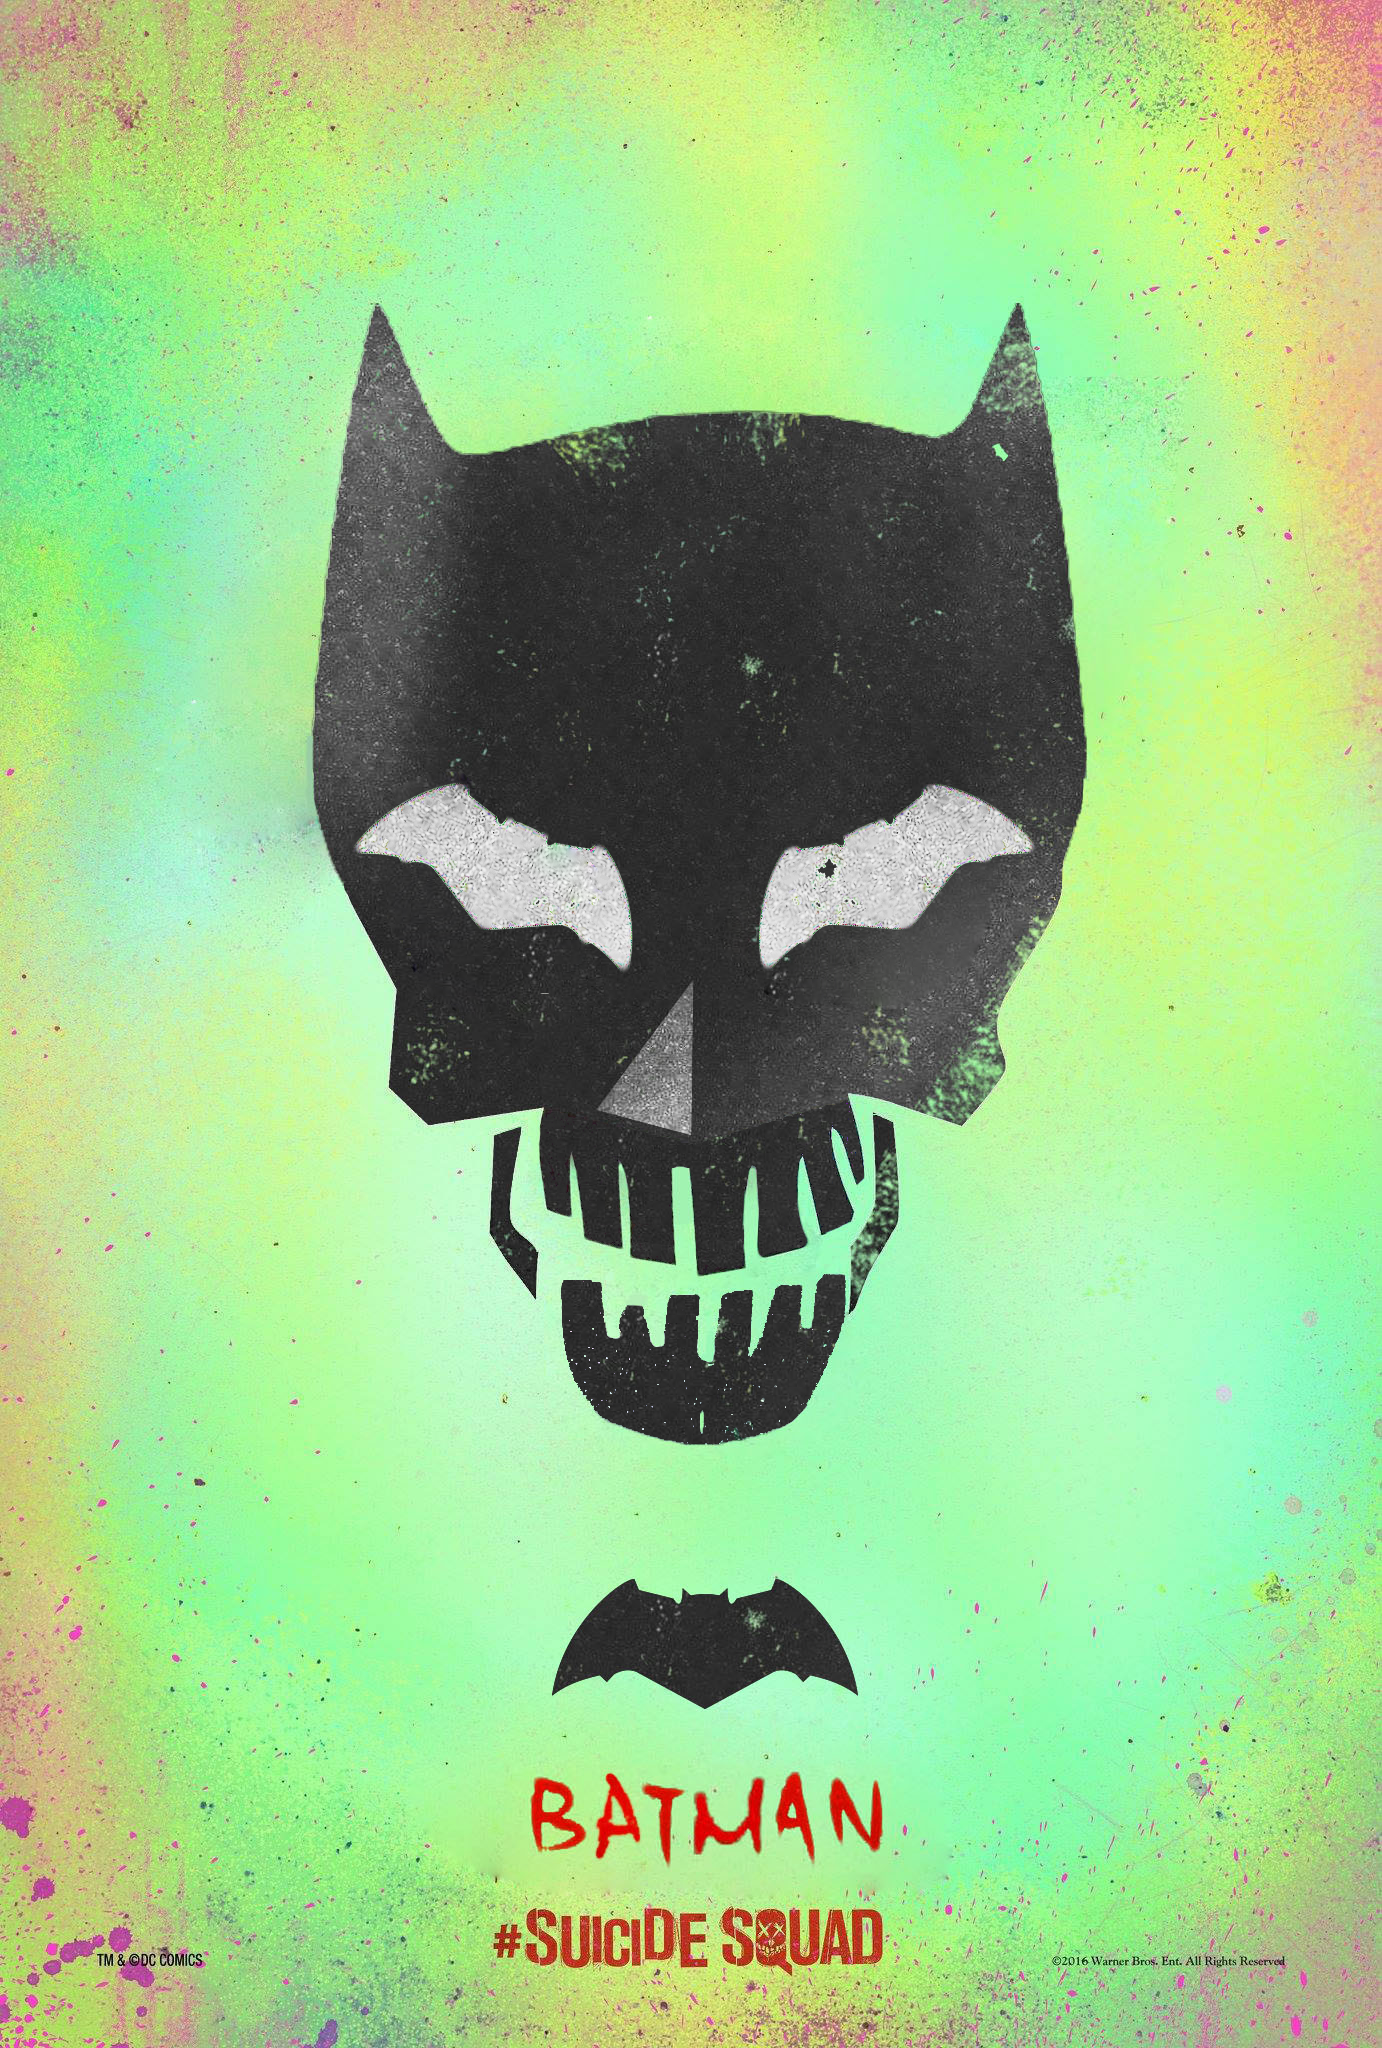 Bat-Eyes Batman Suicide Squad Movie Poster by sonathane on DeviantArt